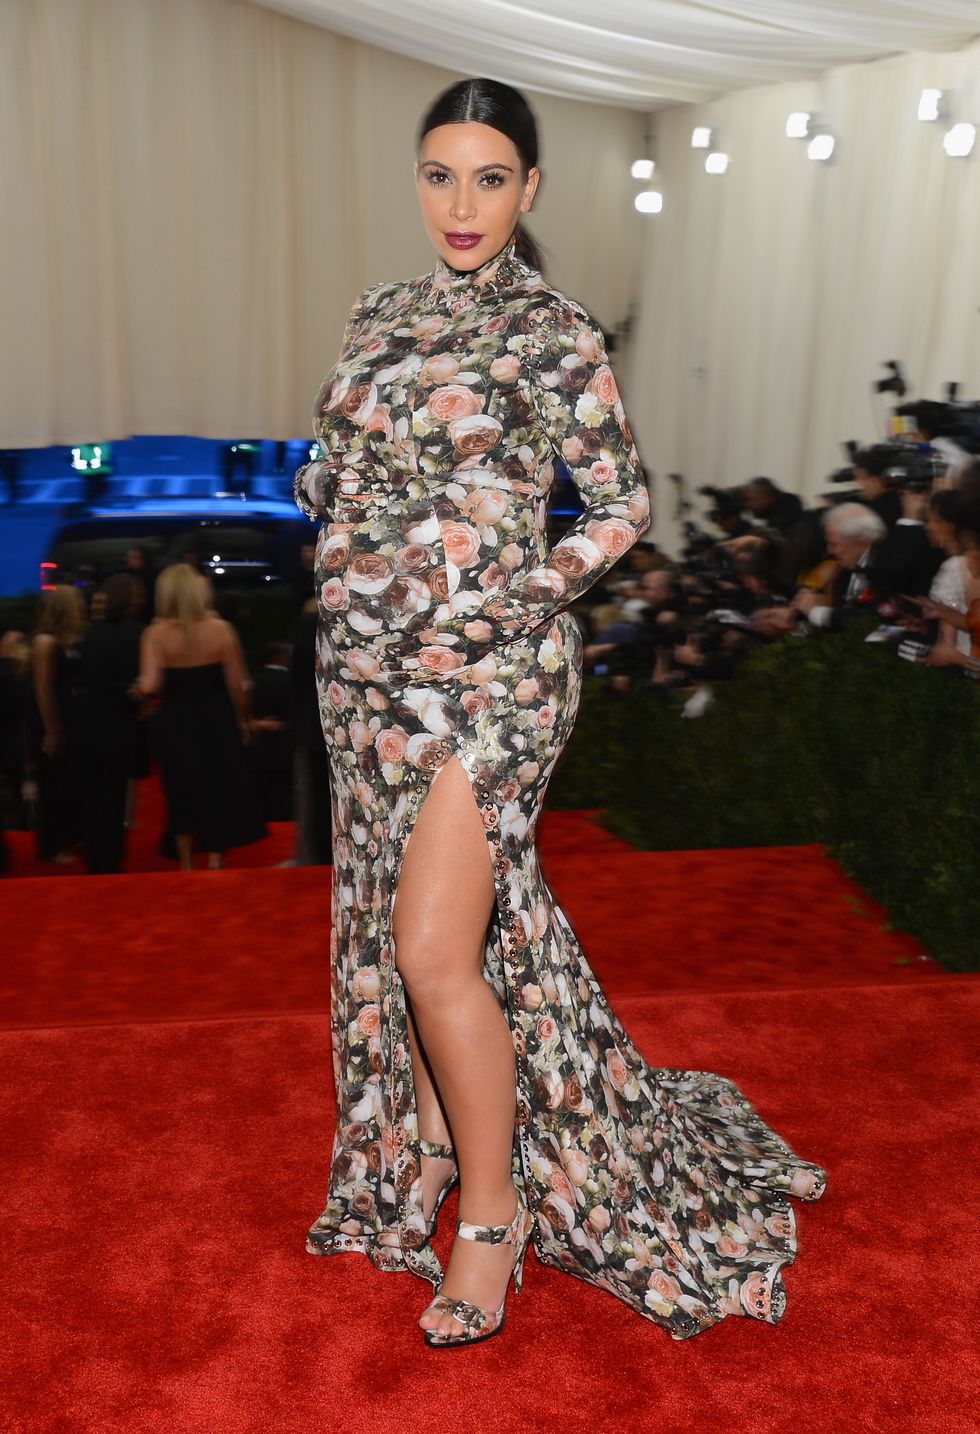 Kim Kardashian's floral dress at the met ball